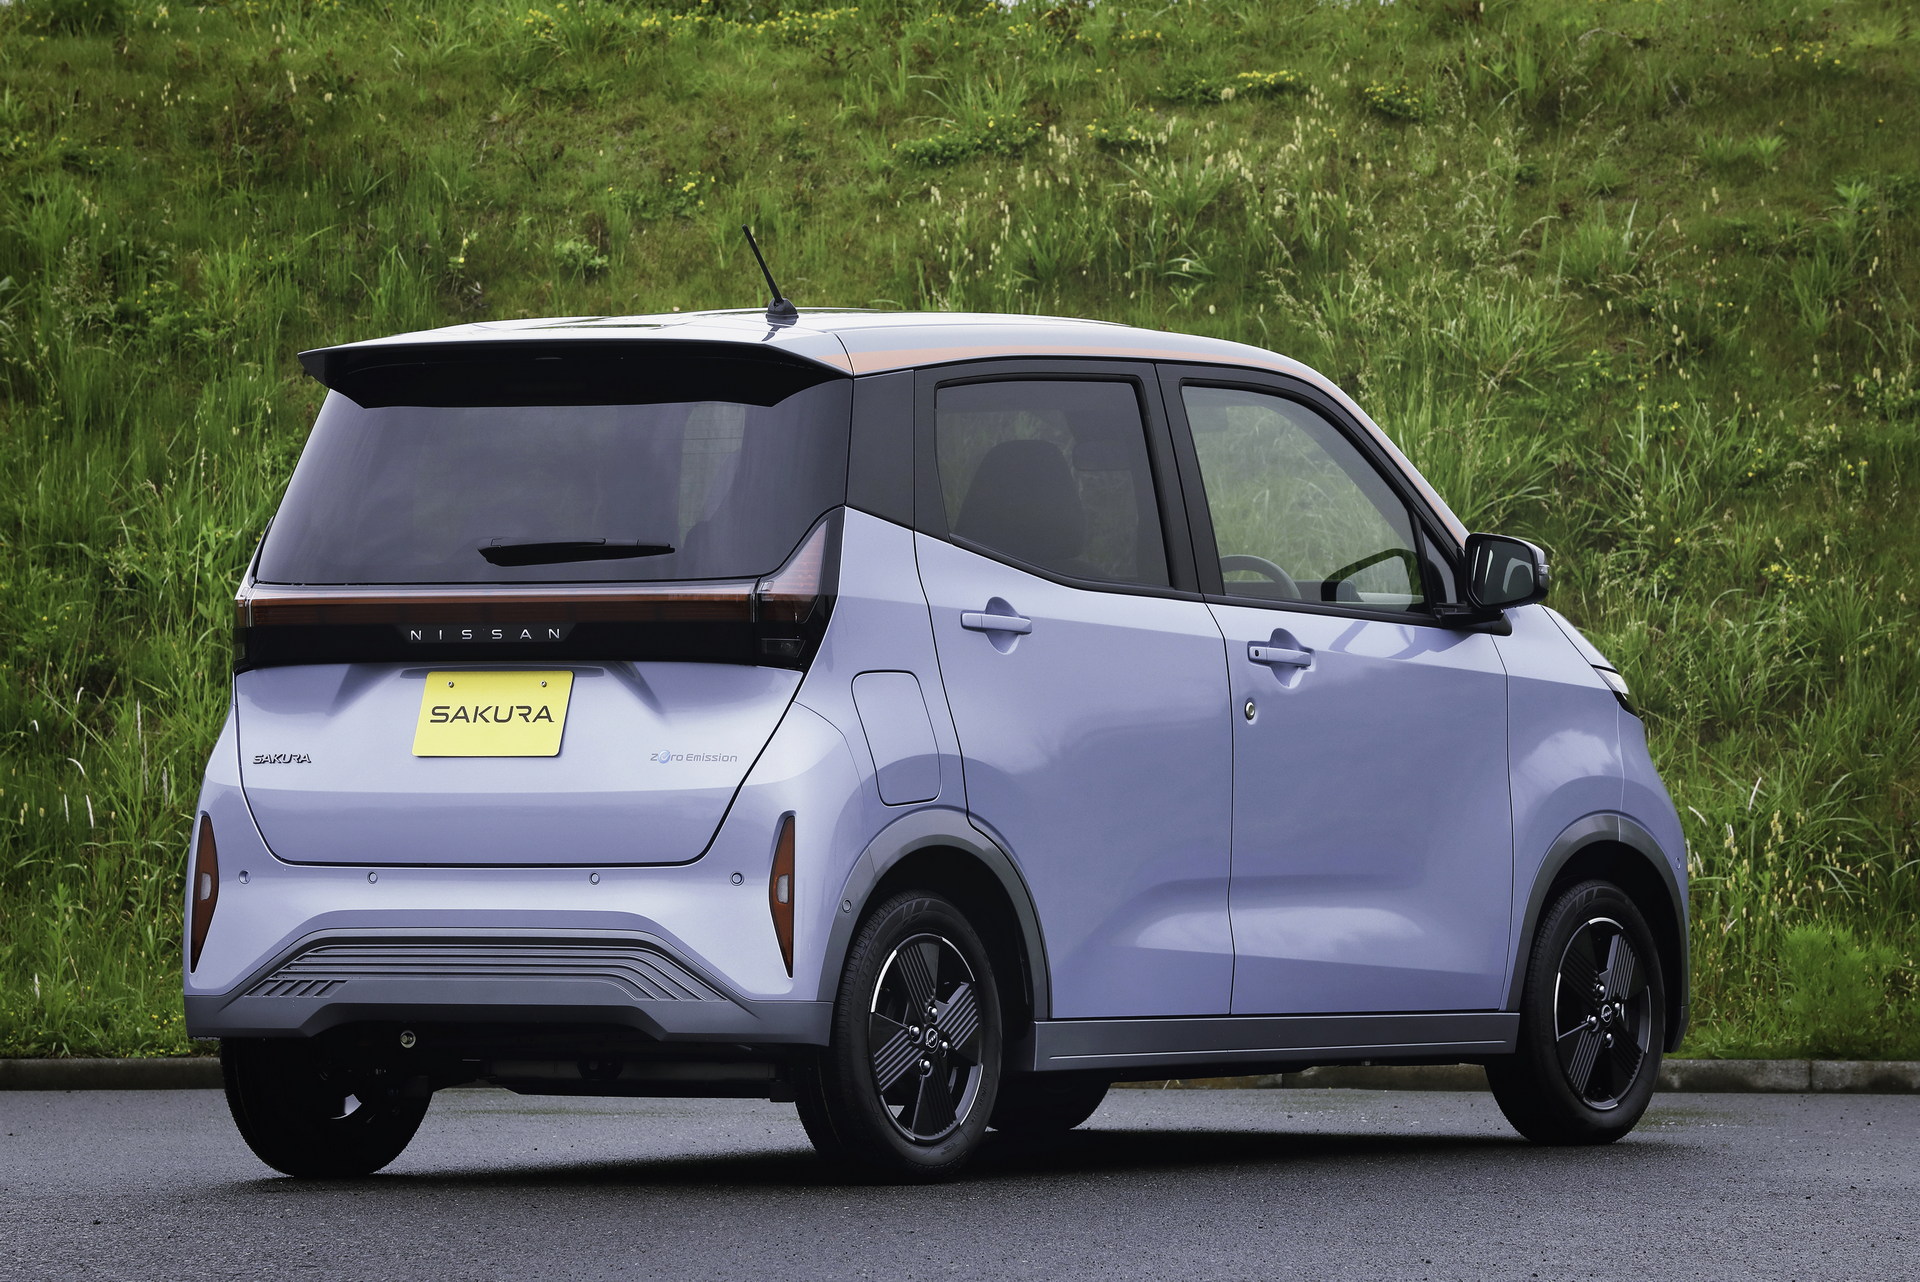 Nissan, minik elektriklisi Sakura'yı tanıttı: 180 kilometre menzile sahip